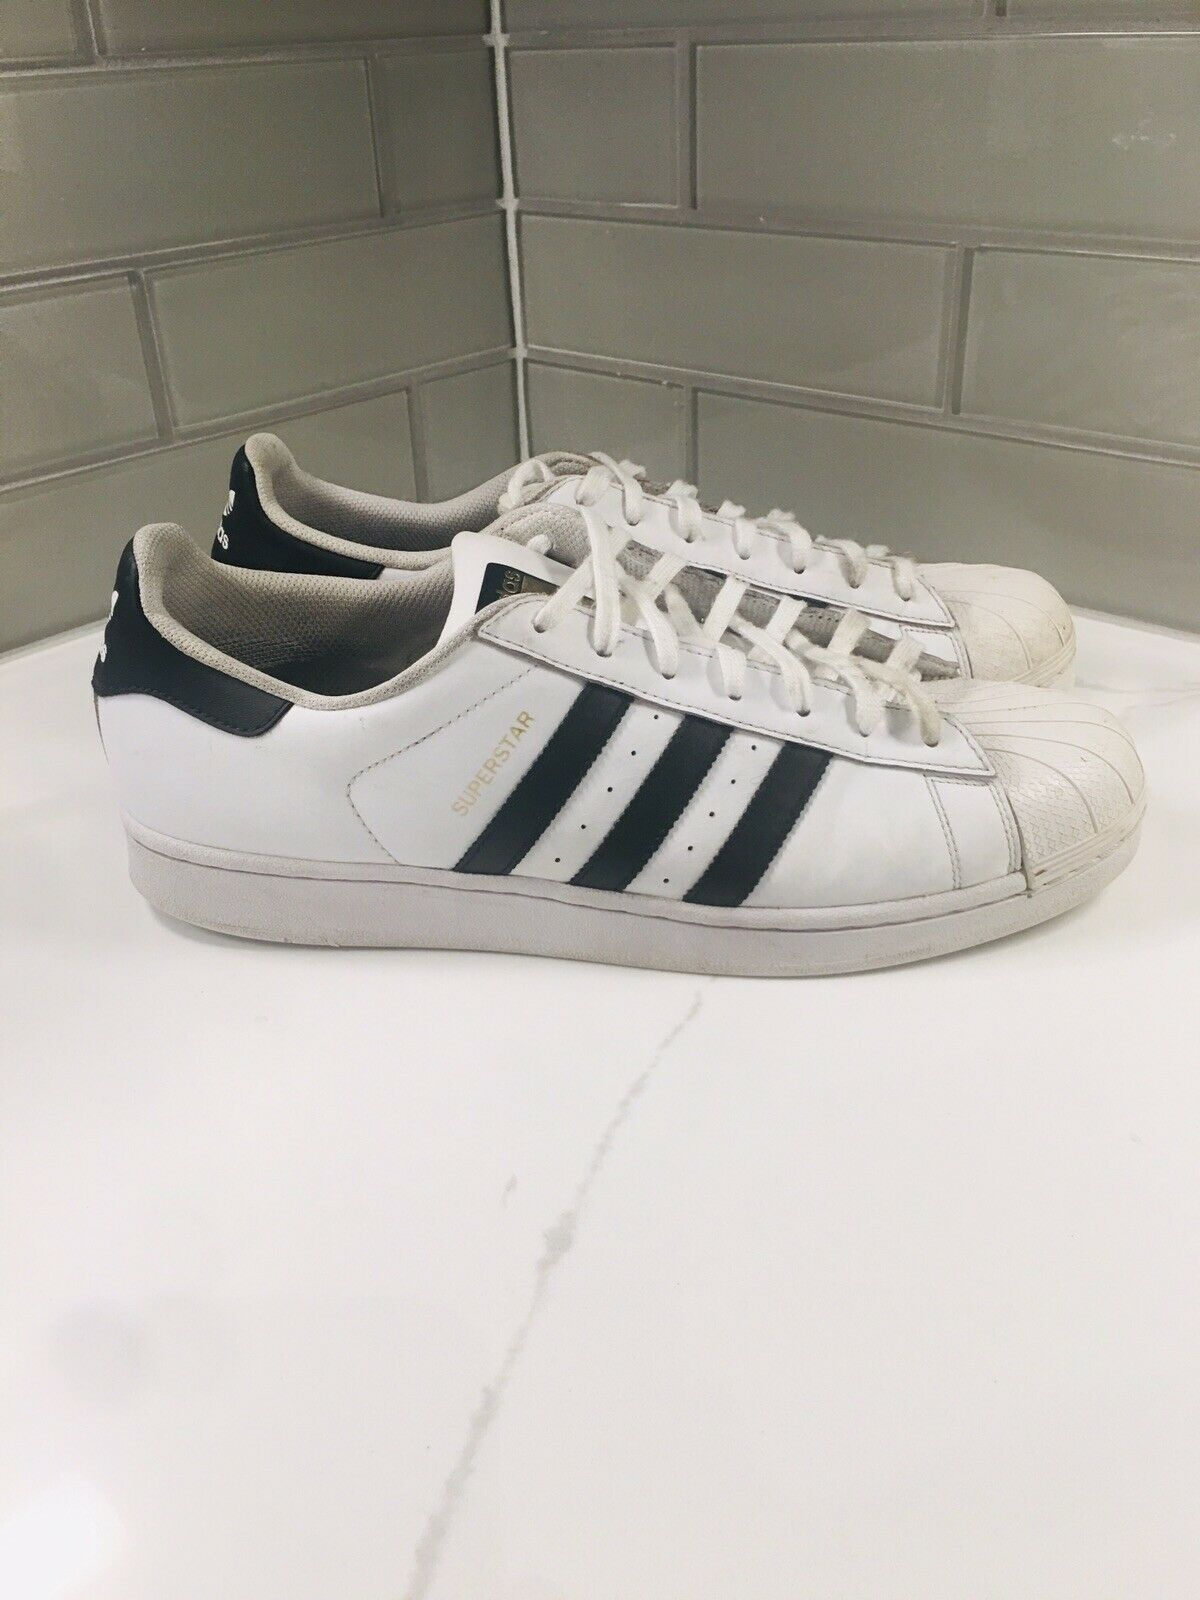 Adidas Superstar Originals Shell Toe Shoes Men’s 12 White / Black Stripes C77124